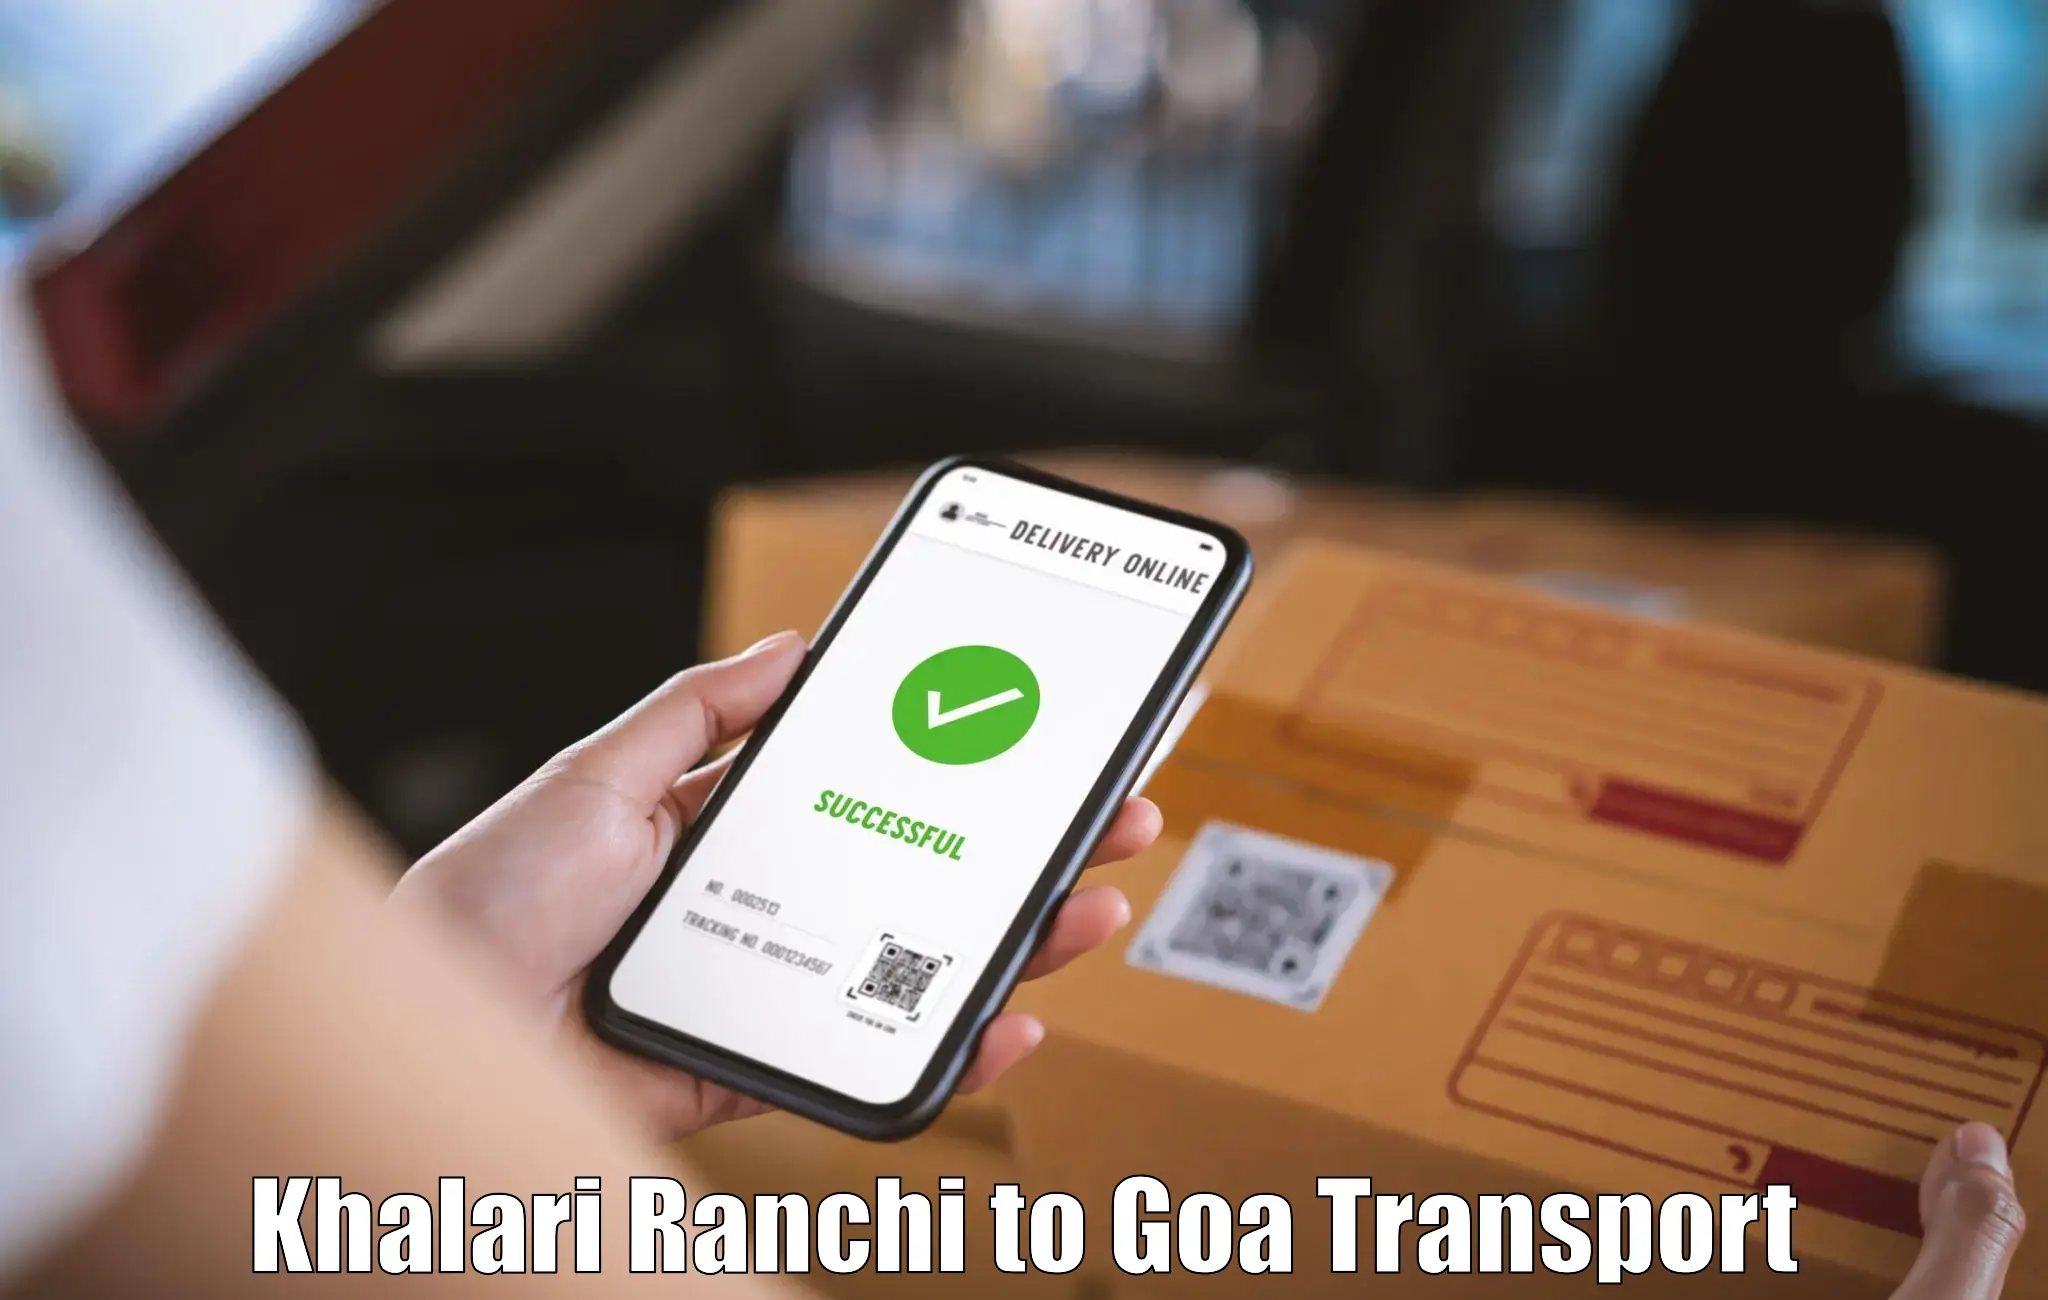 Container transport service Khalari Ranchi to Goa